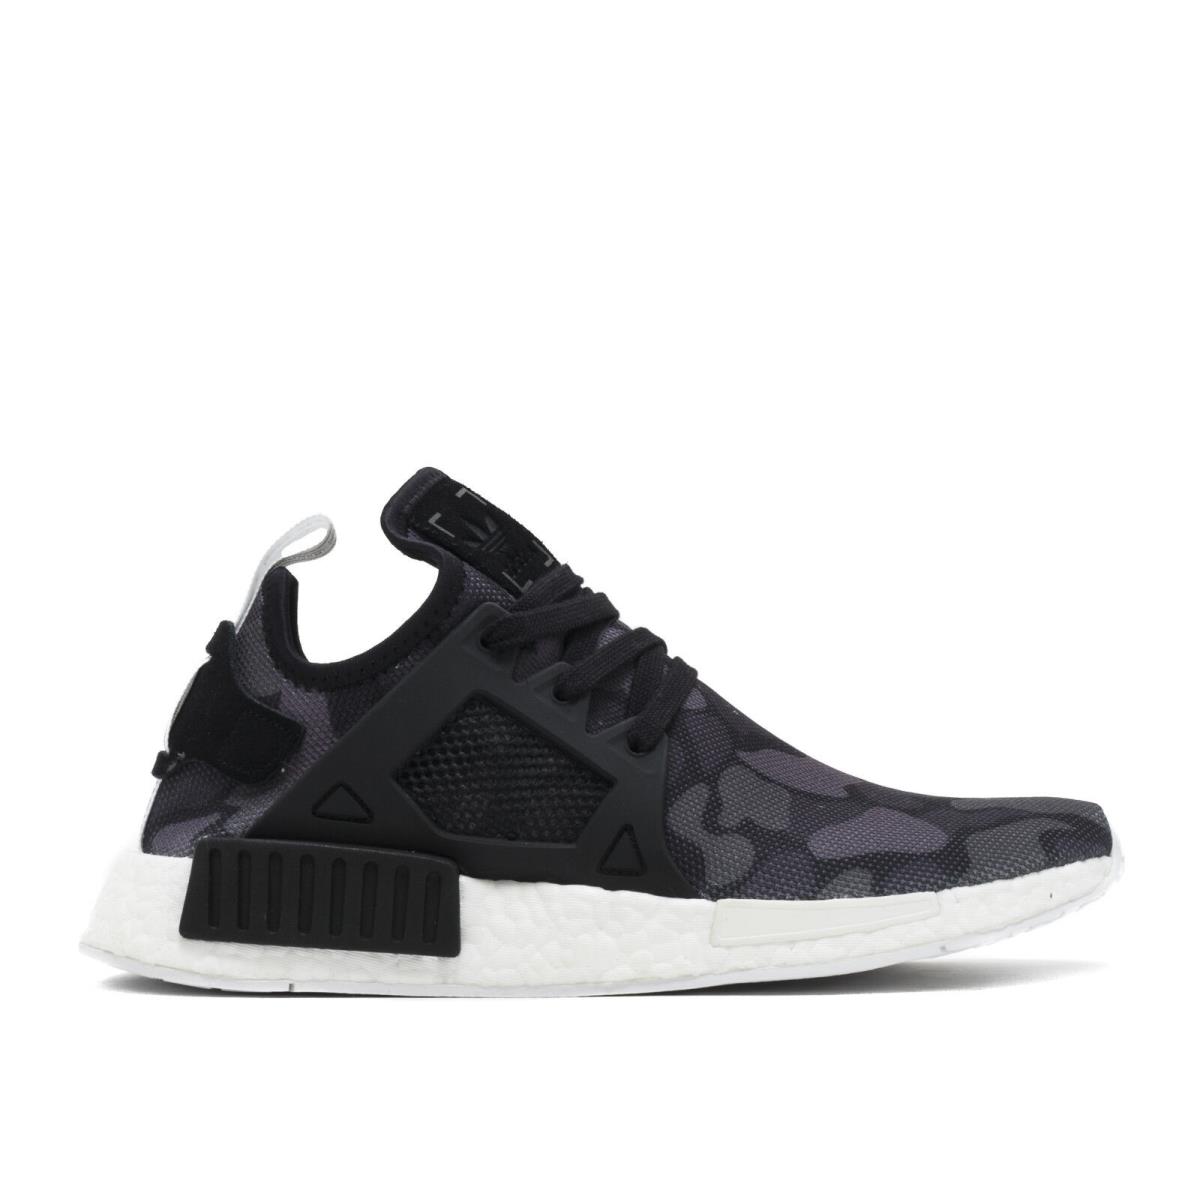 Adidas Nmd XR1 Black Grey Duck Camo Sneaker BA7231 639 Men`s Shoes - Black/Grey